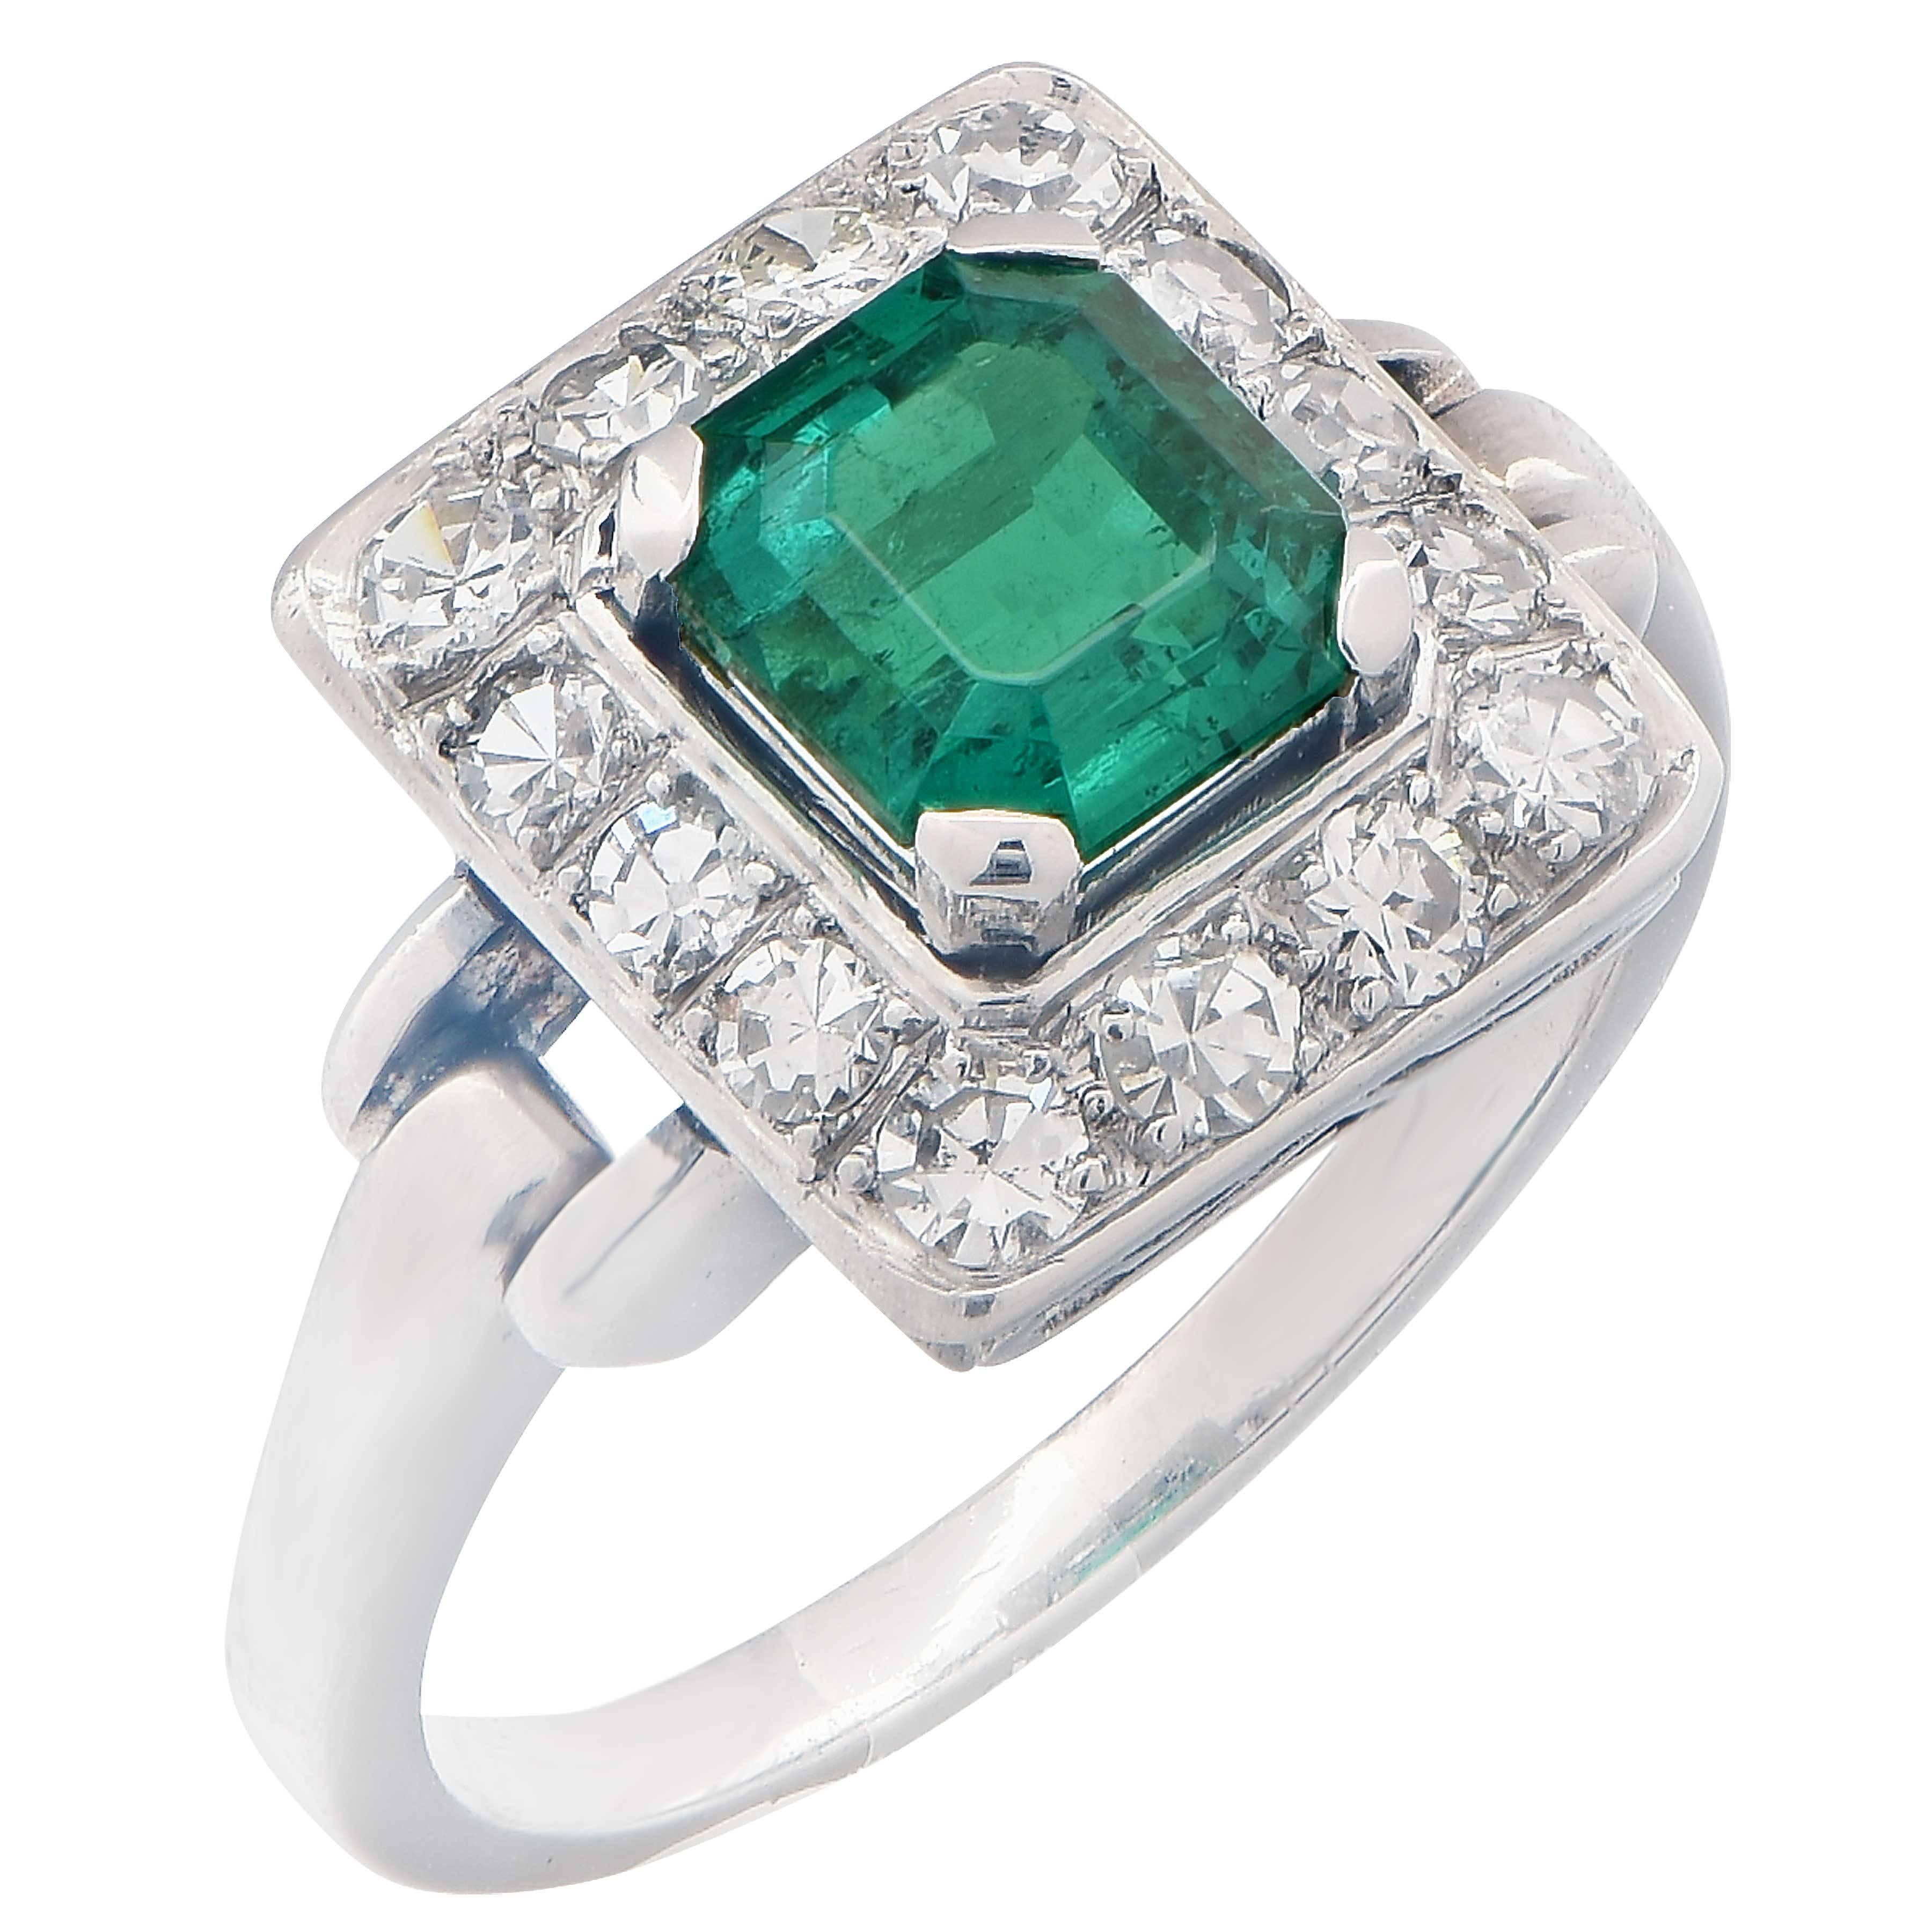 1.36 Carat Colombian Emerald No Treatment AGL Diamond Ring